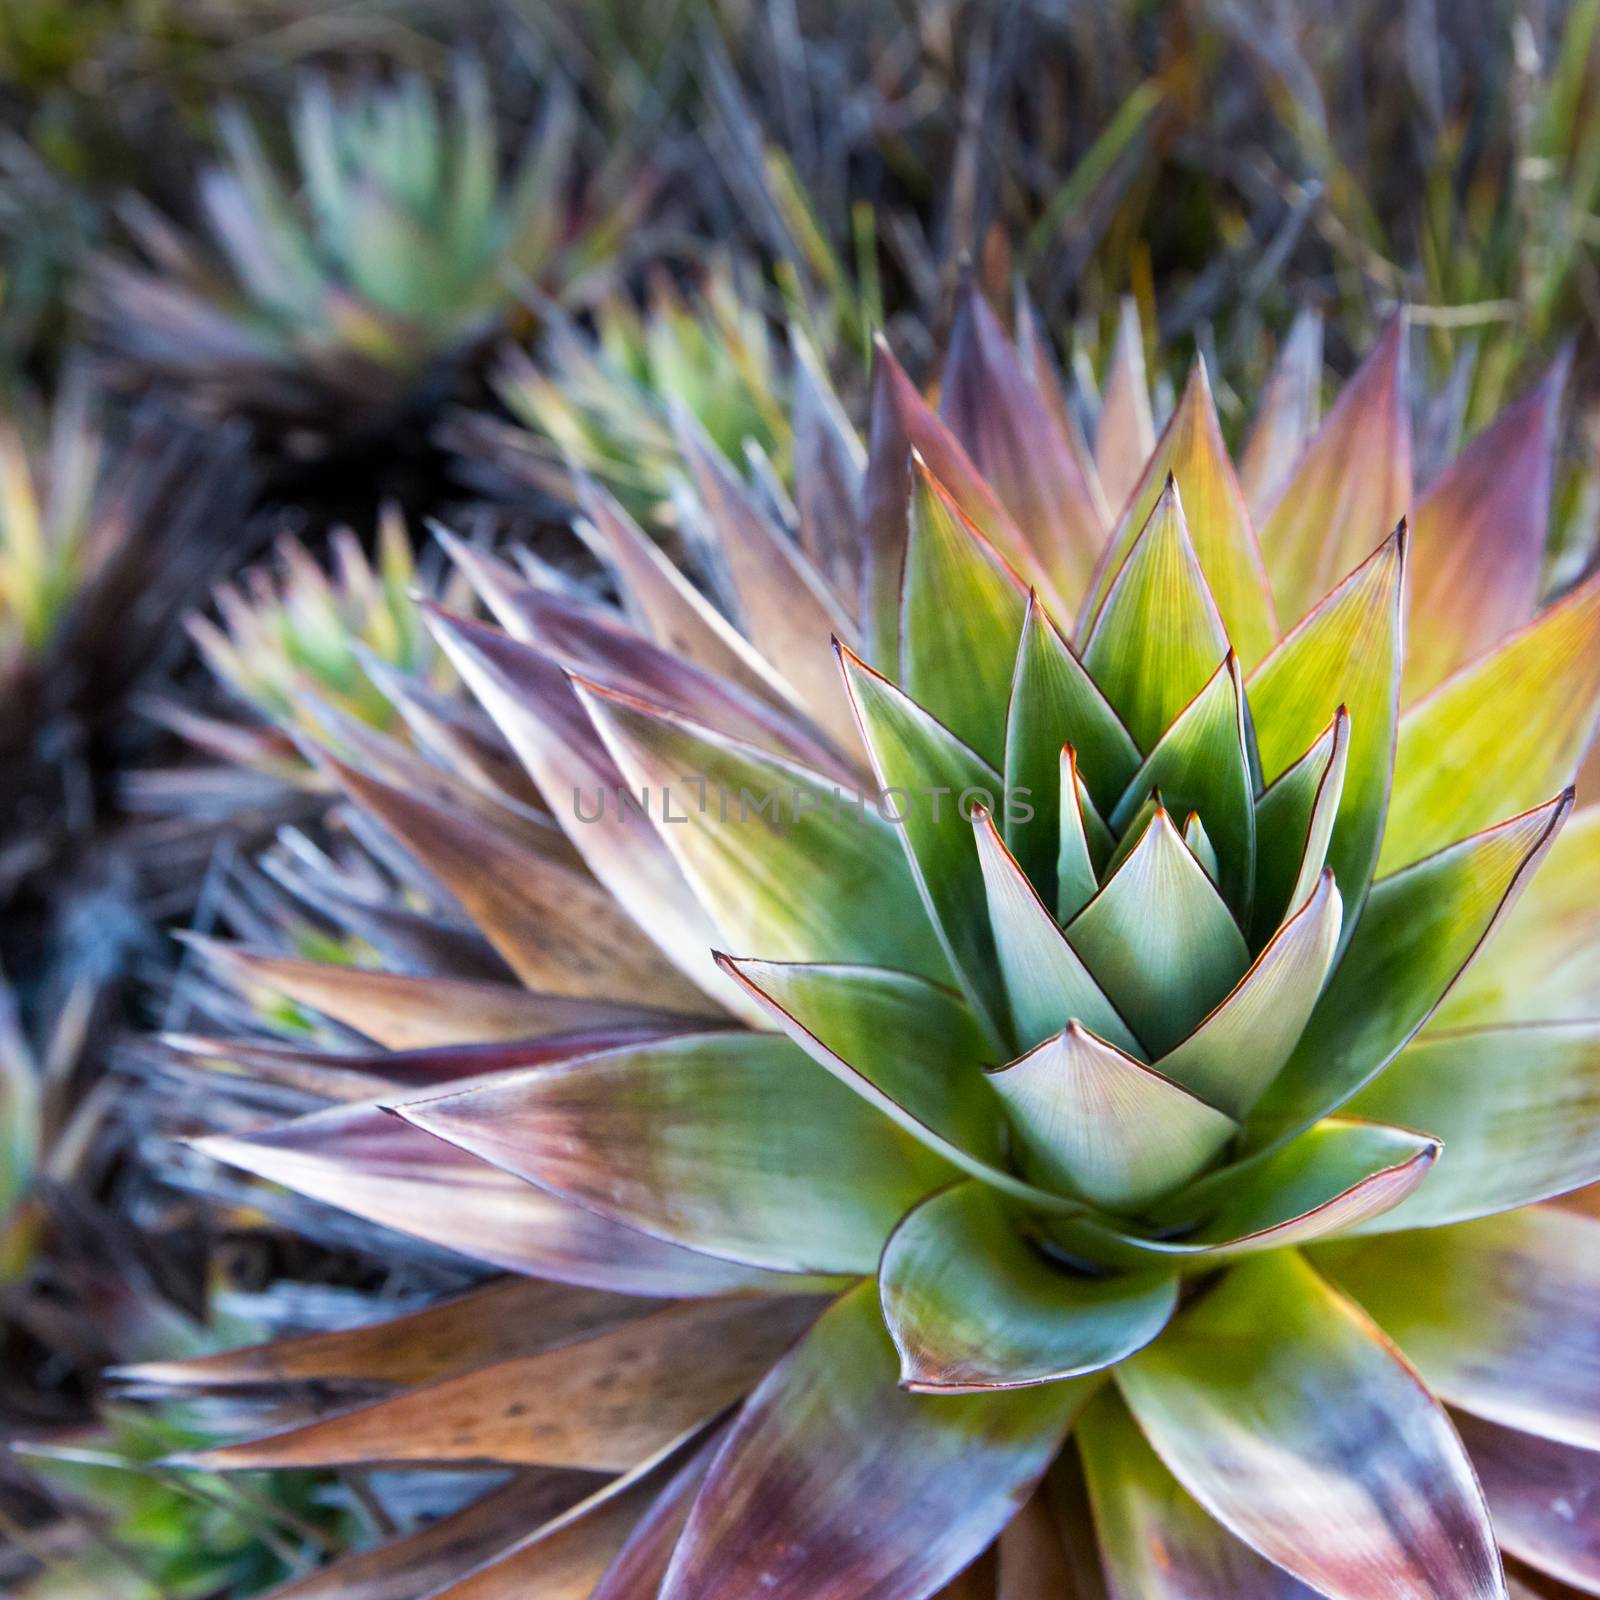 Endemic plant from Mount Roraima in Venezuela by mariusz_prusaczyk